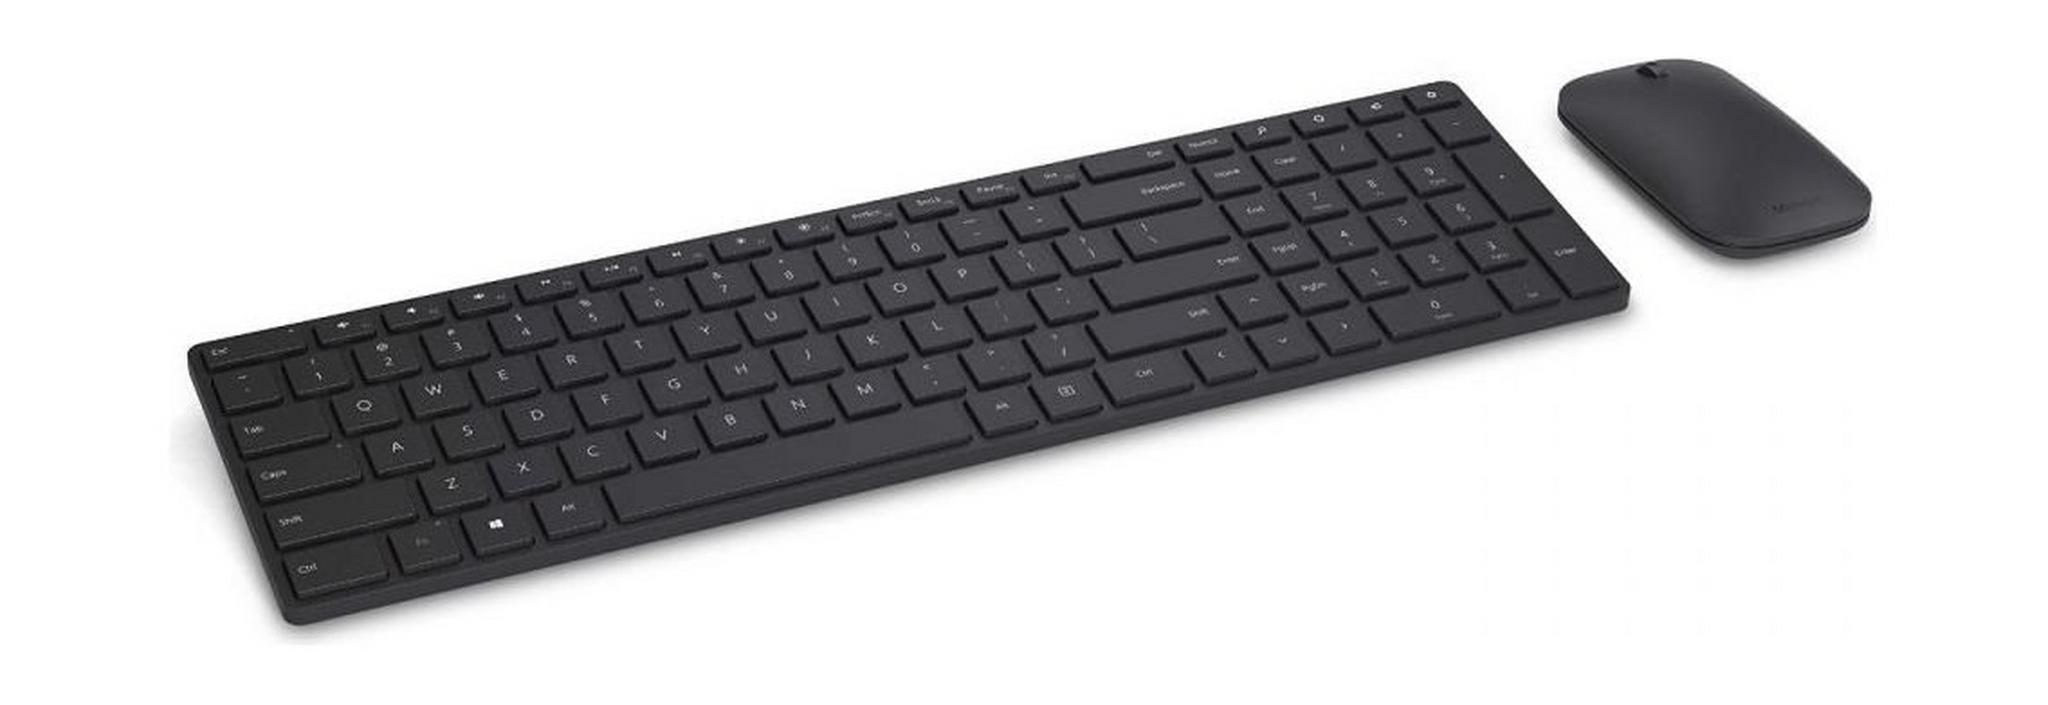 Microsoft Designer Bluetooth Desktop Keyboard and Mouse – Black